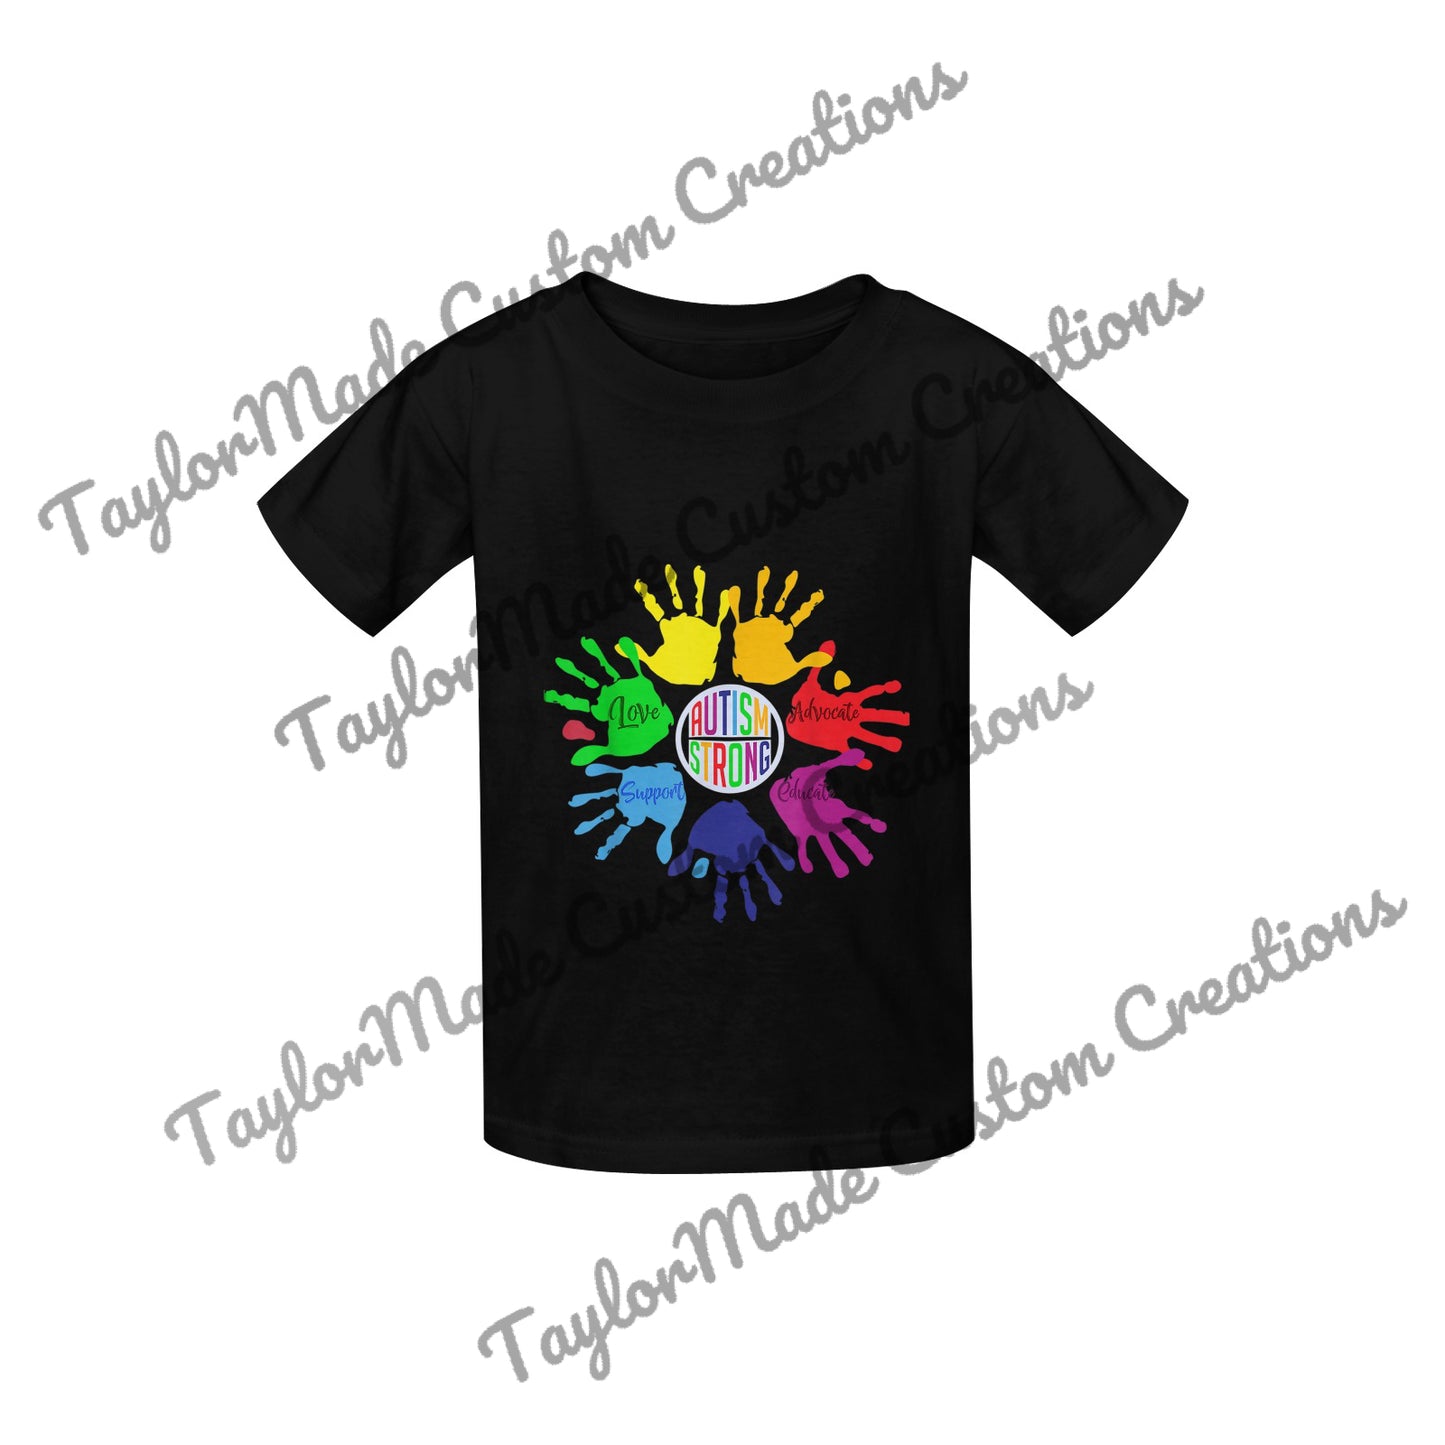 Handprint Autism Awareness T-Shirt - Youth